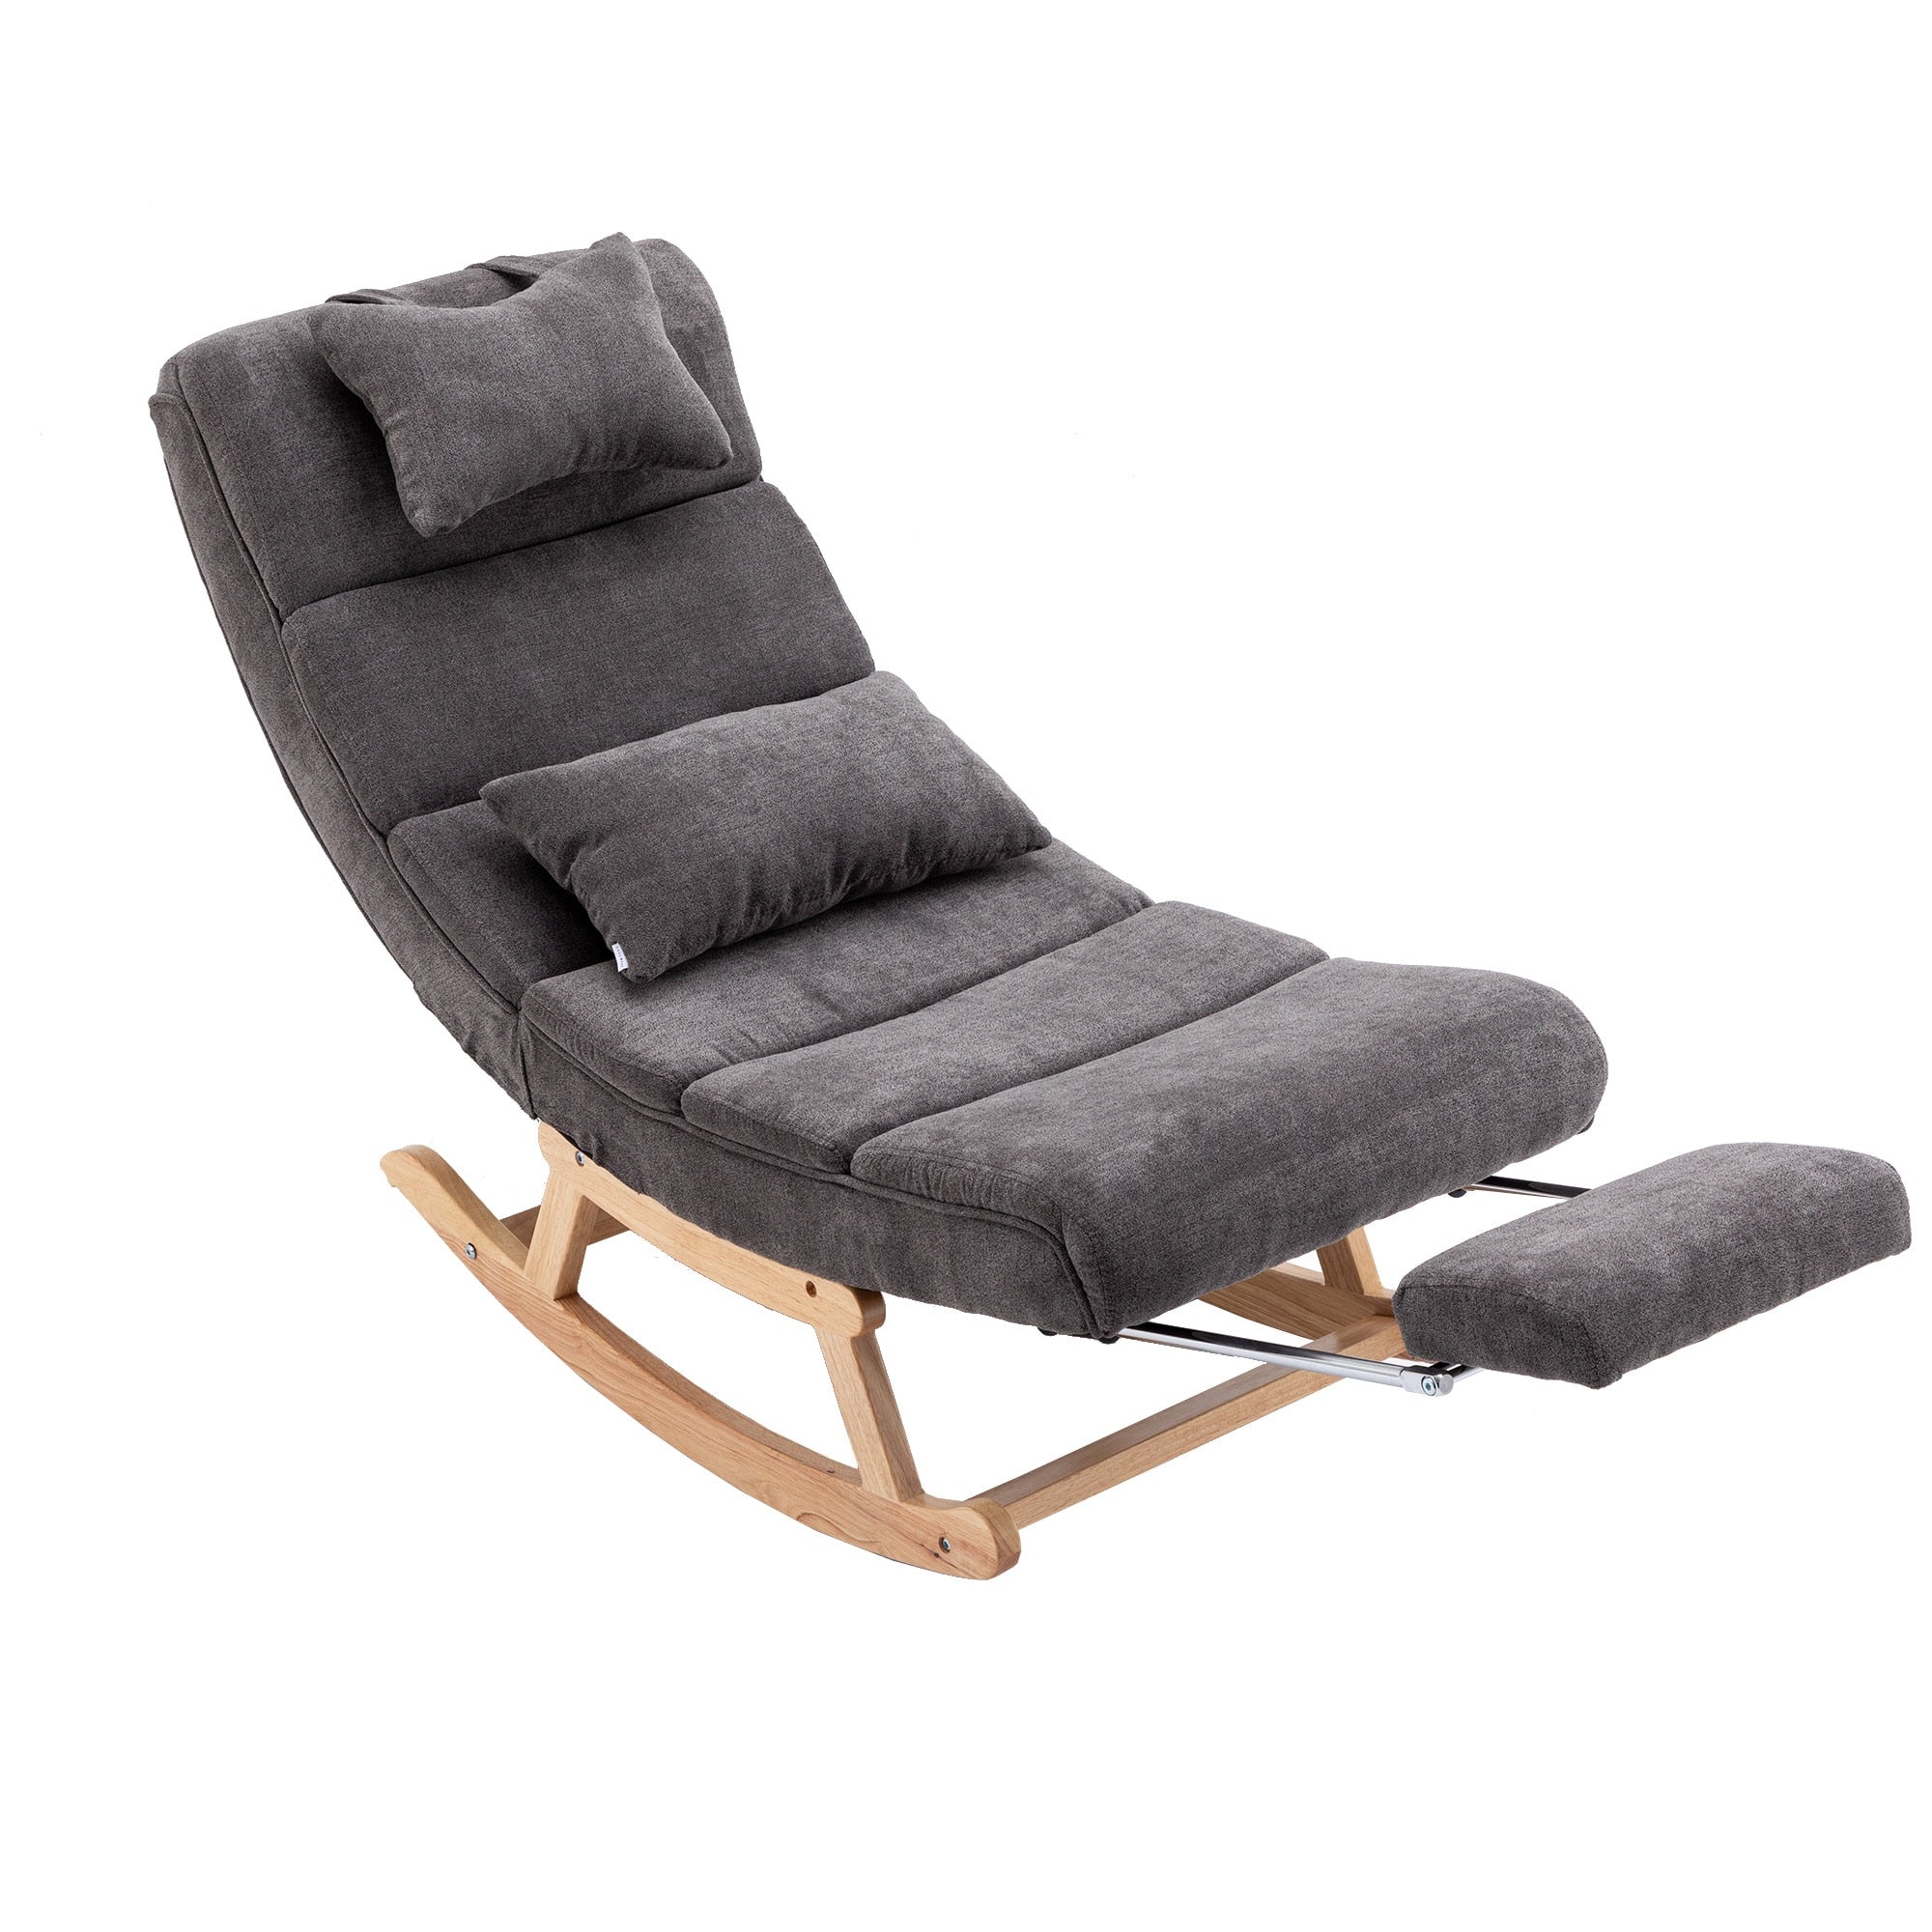 Homio Decor Living Room Dark Gray / United States Modern Mid-Century Rocking Chair